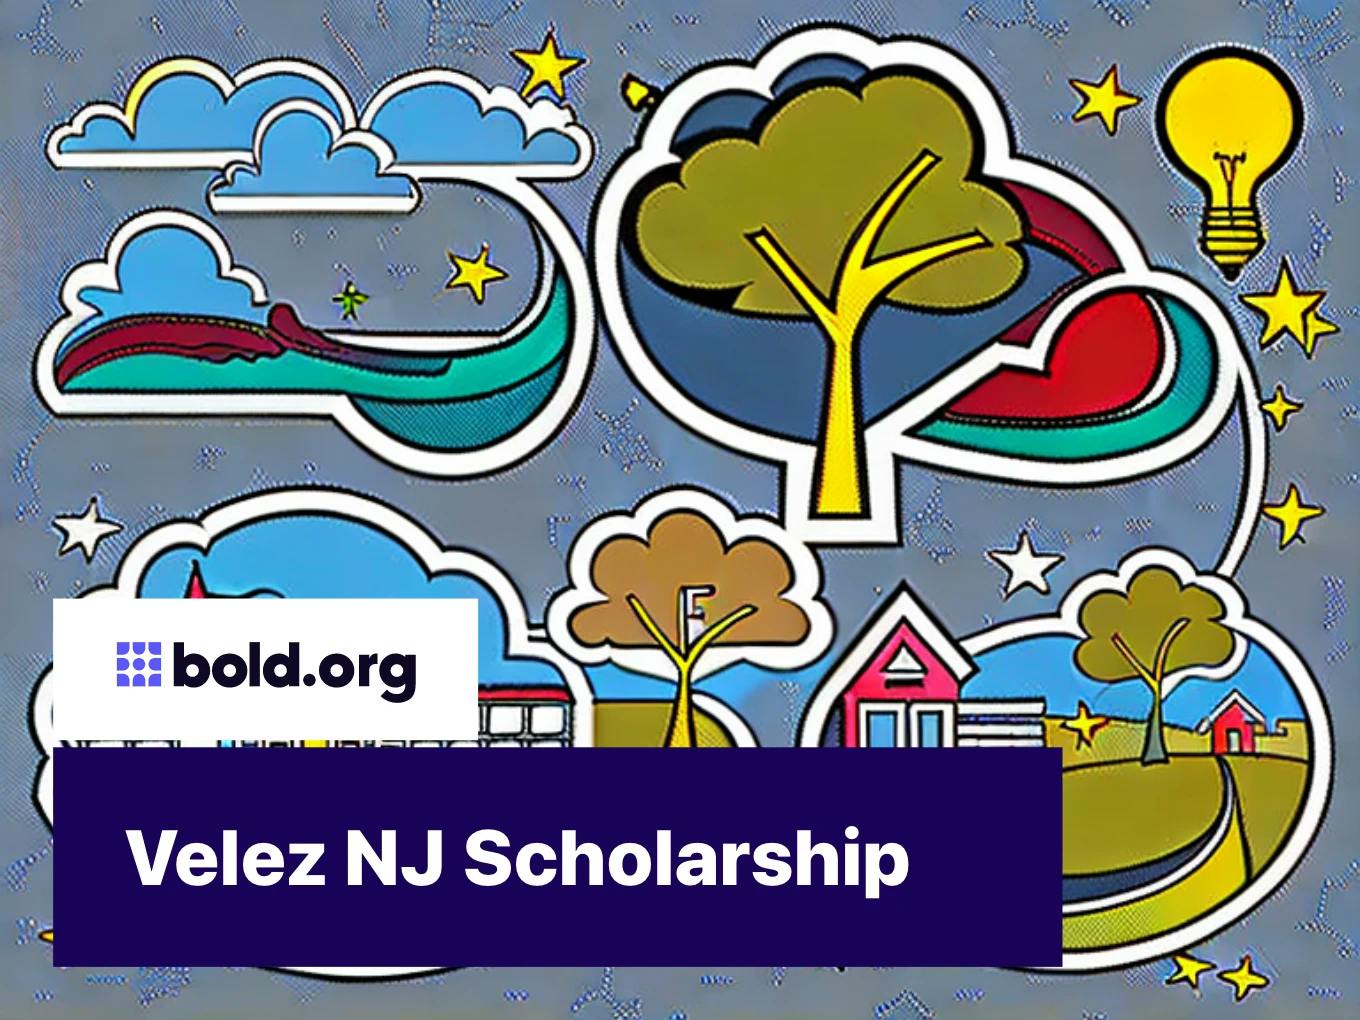 Velez NJ Scholarship